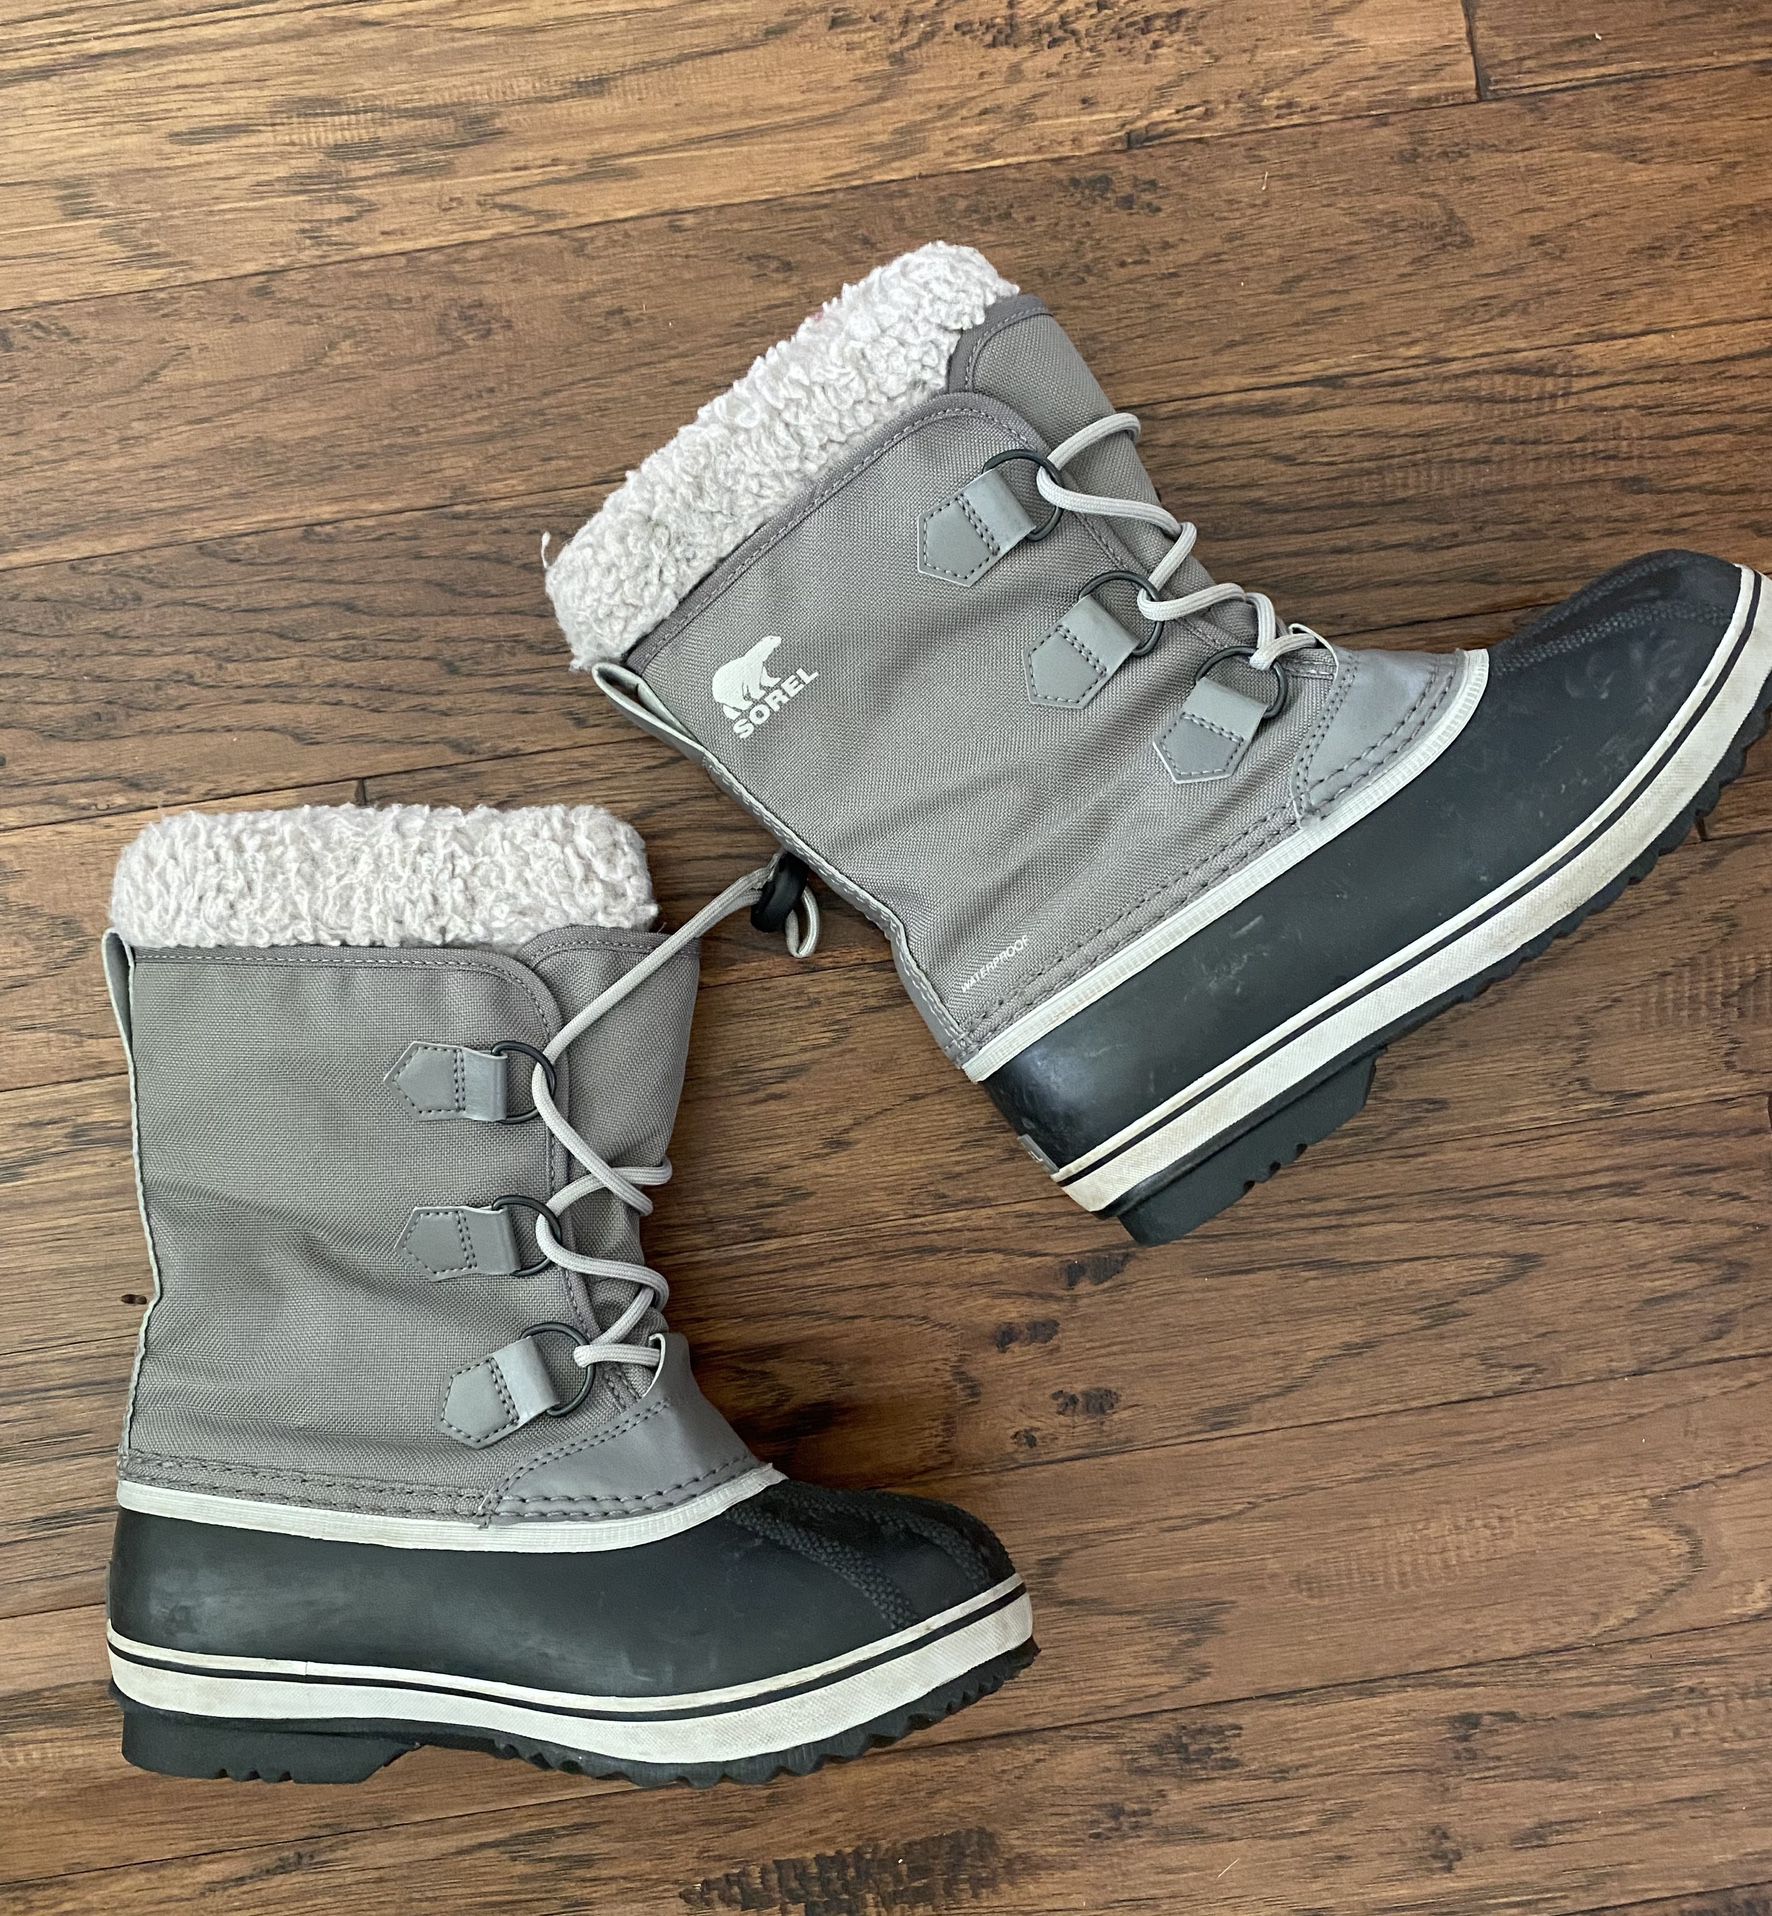 Girls ( Or Small Women’s) Size 4 Sorel  Waterproof Snow/Winter Boots 